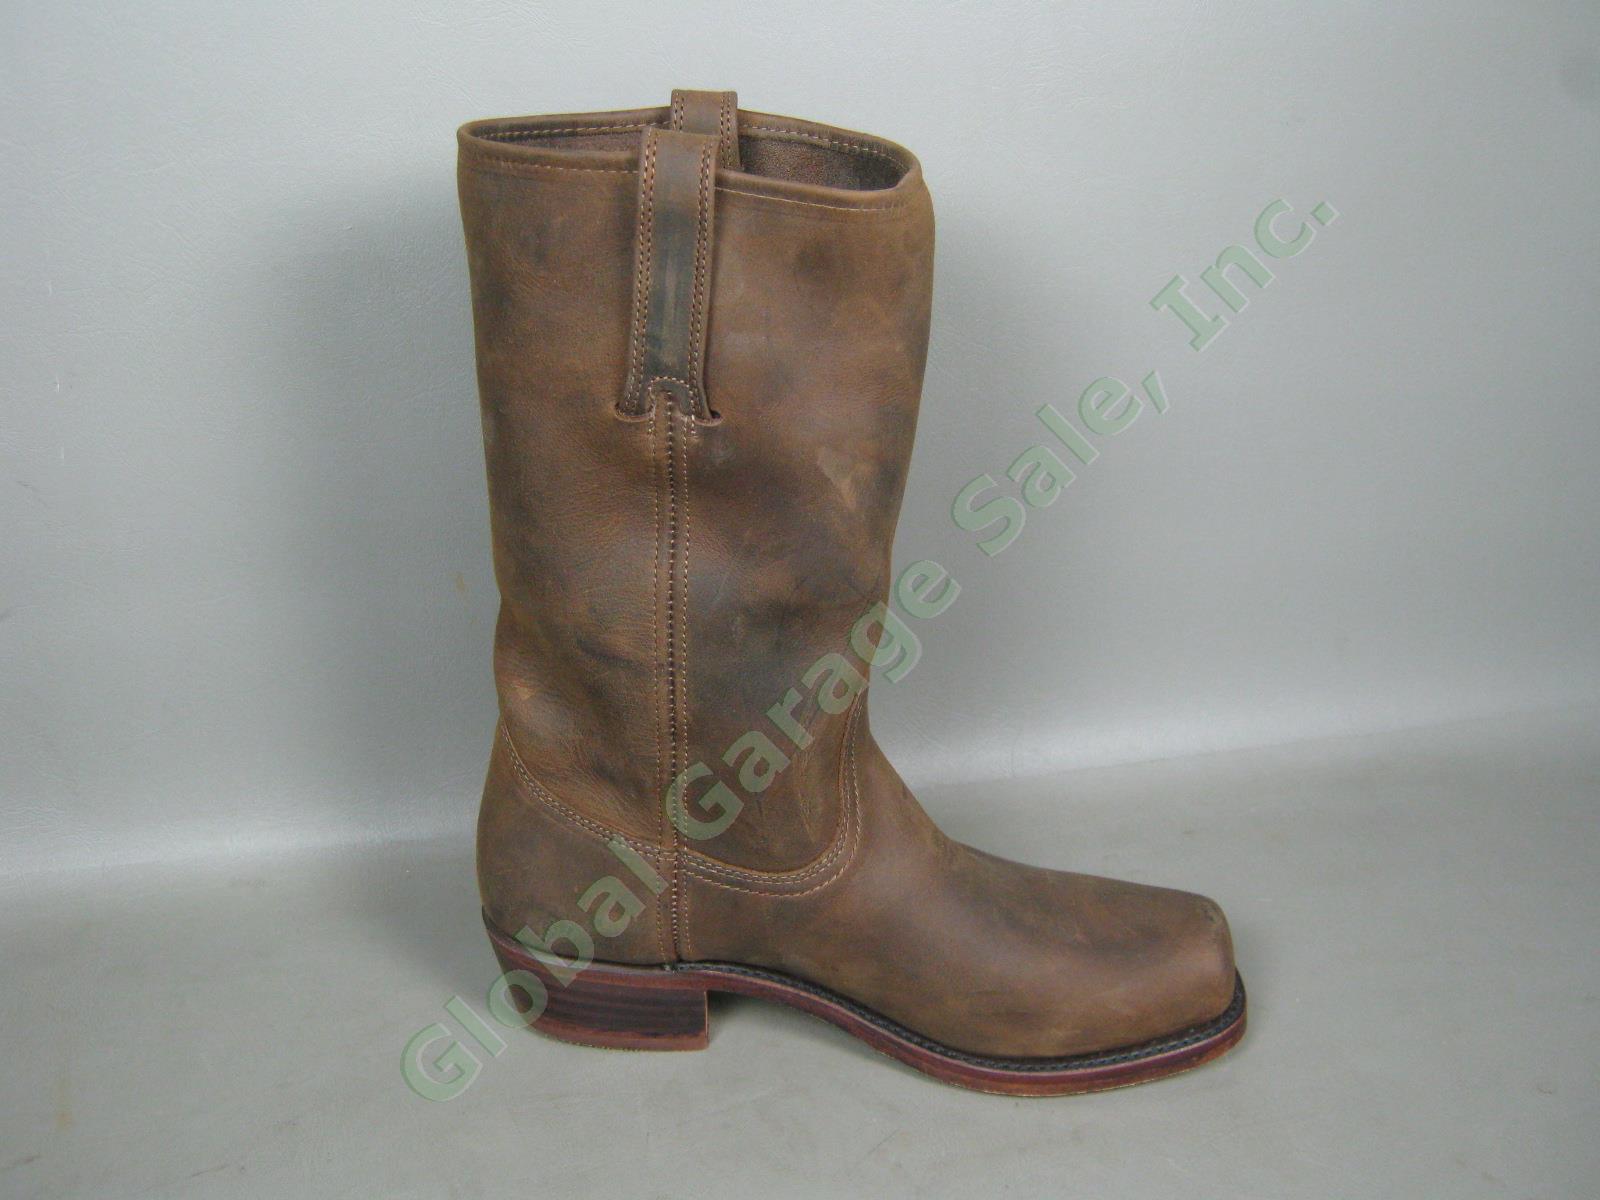 Mens Frye Cavalry 12L Tan Leather Boots Worn Once 9.5 Medium Width W/Box 87410-1 2